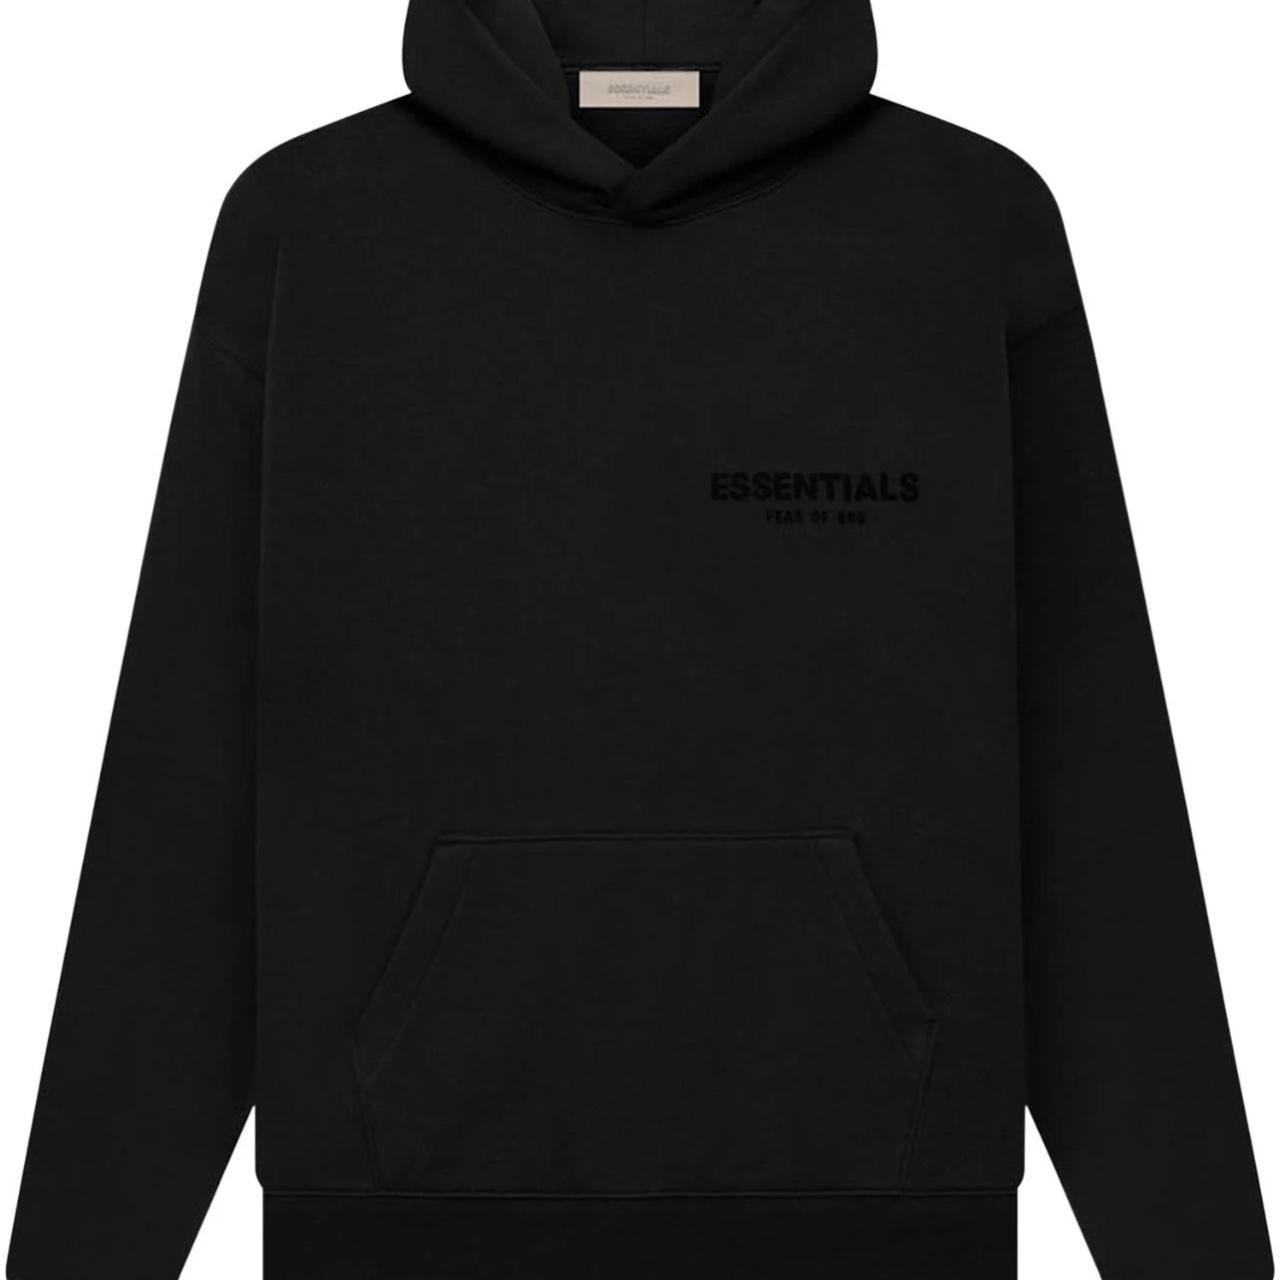 Essentials fear of God black hoodie. Size small... - Depop